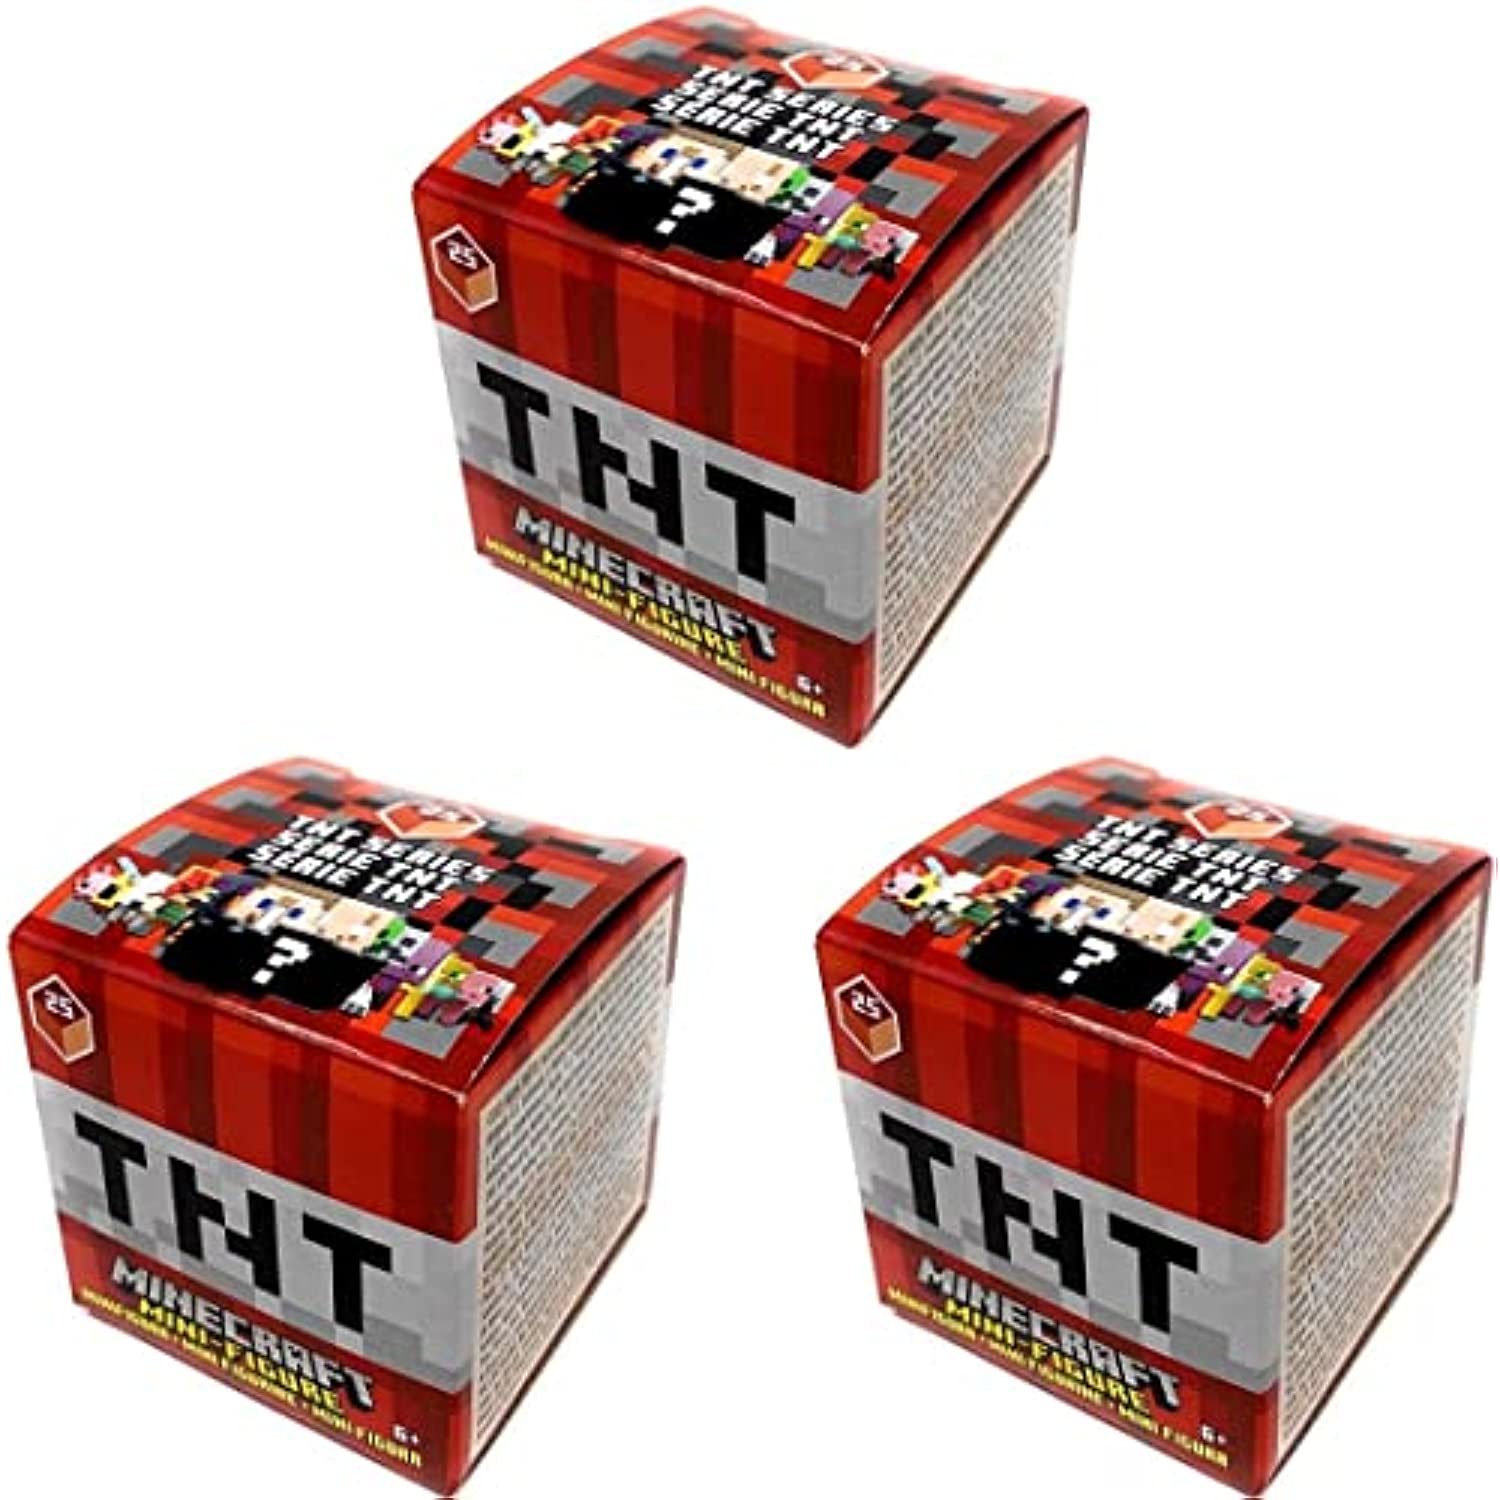 Set of 3 |Minecraft TNT Series 25 Mystery Pack (3 RANDOM Figures) No Duplicates